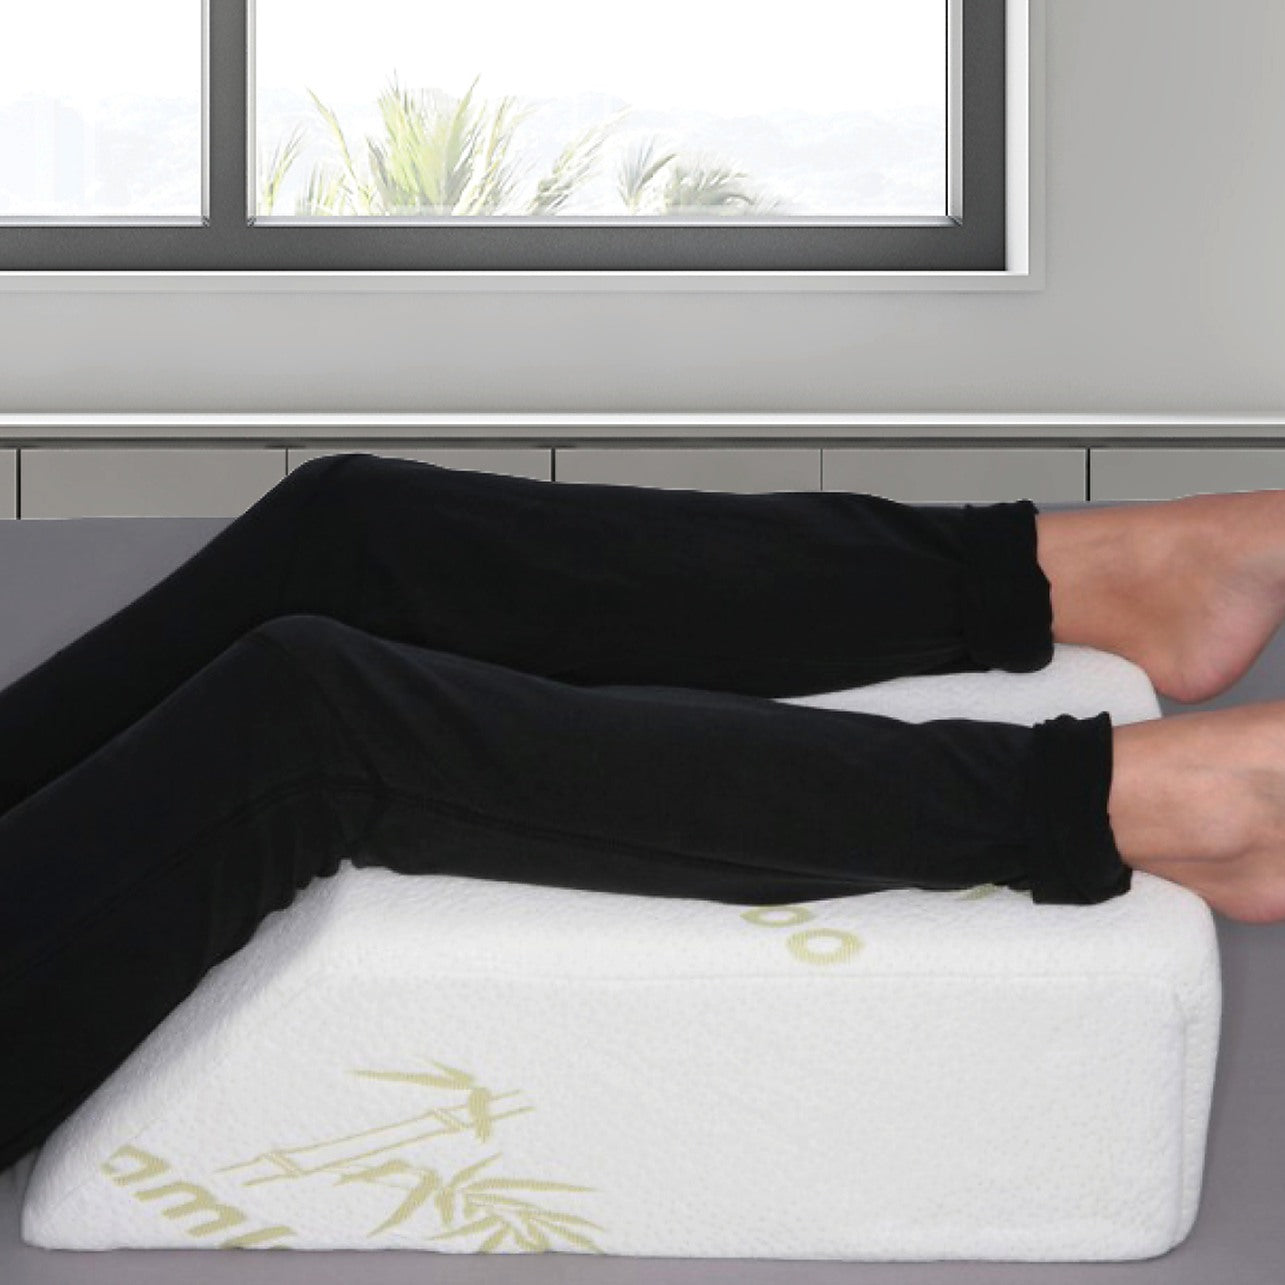 Abco Tech Leg Elevation Pillow with Memory Foam Top Leg Rest 8 Inch He